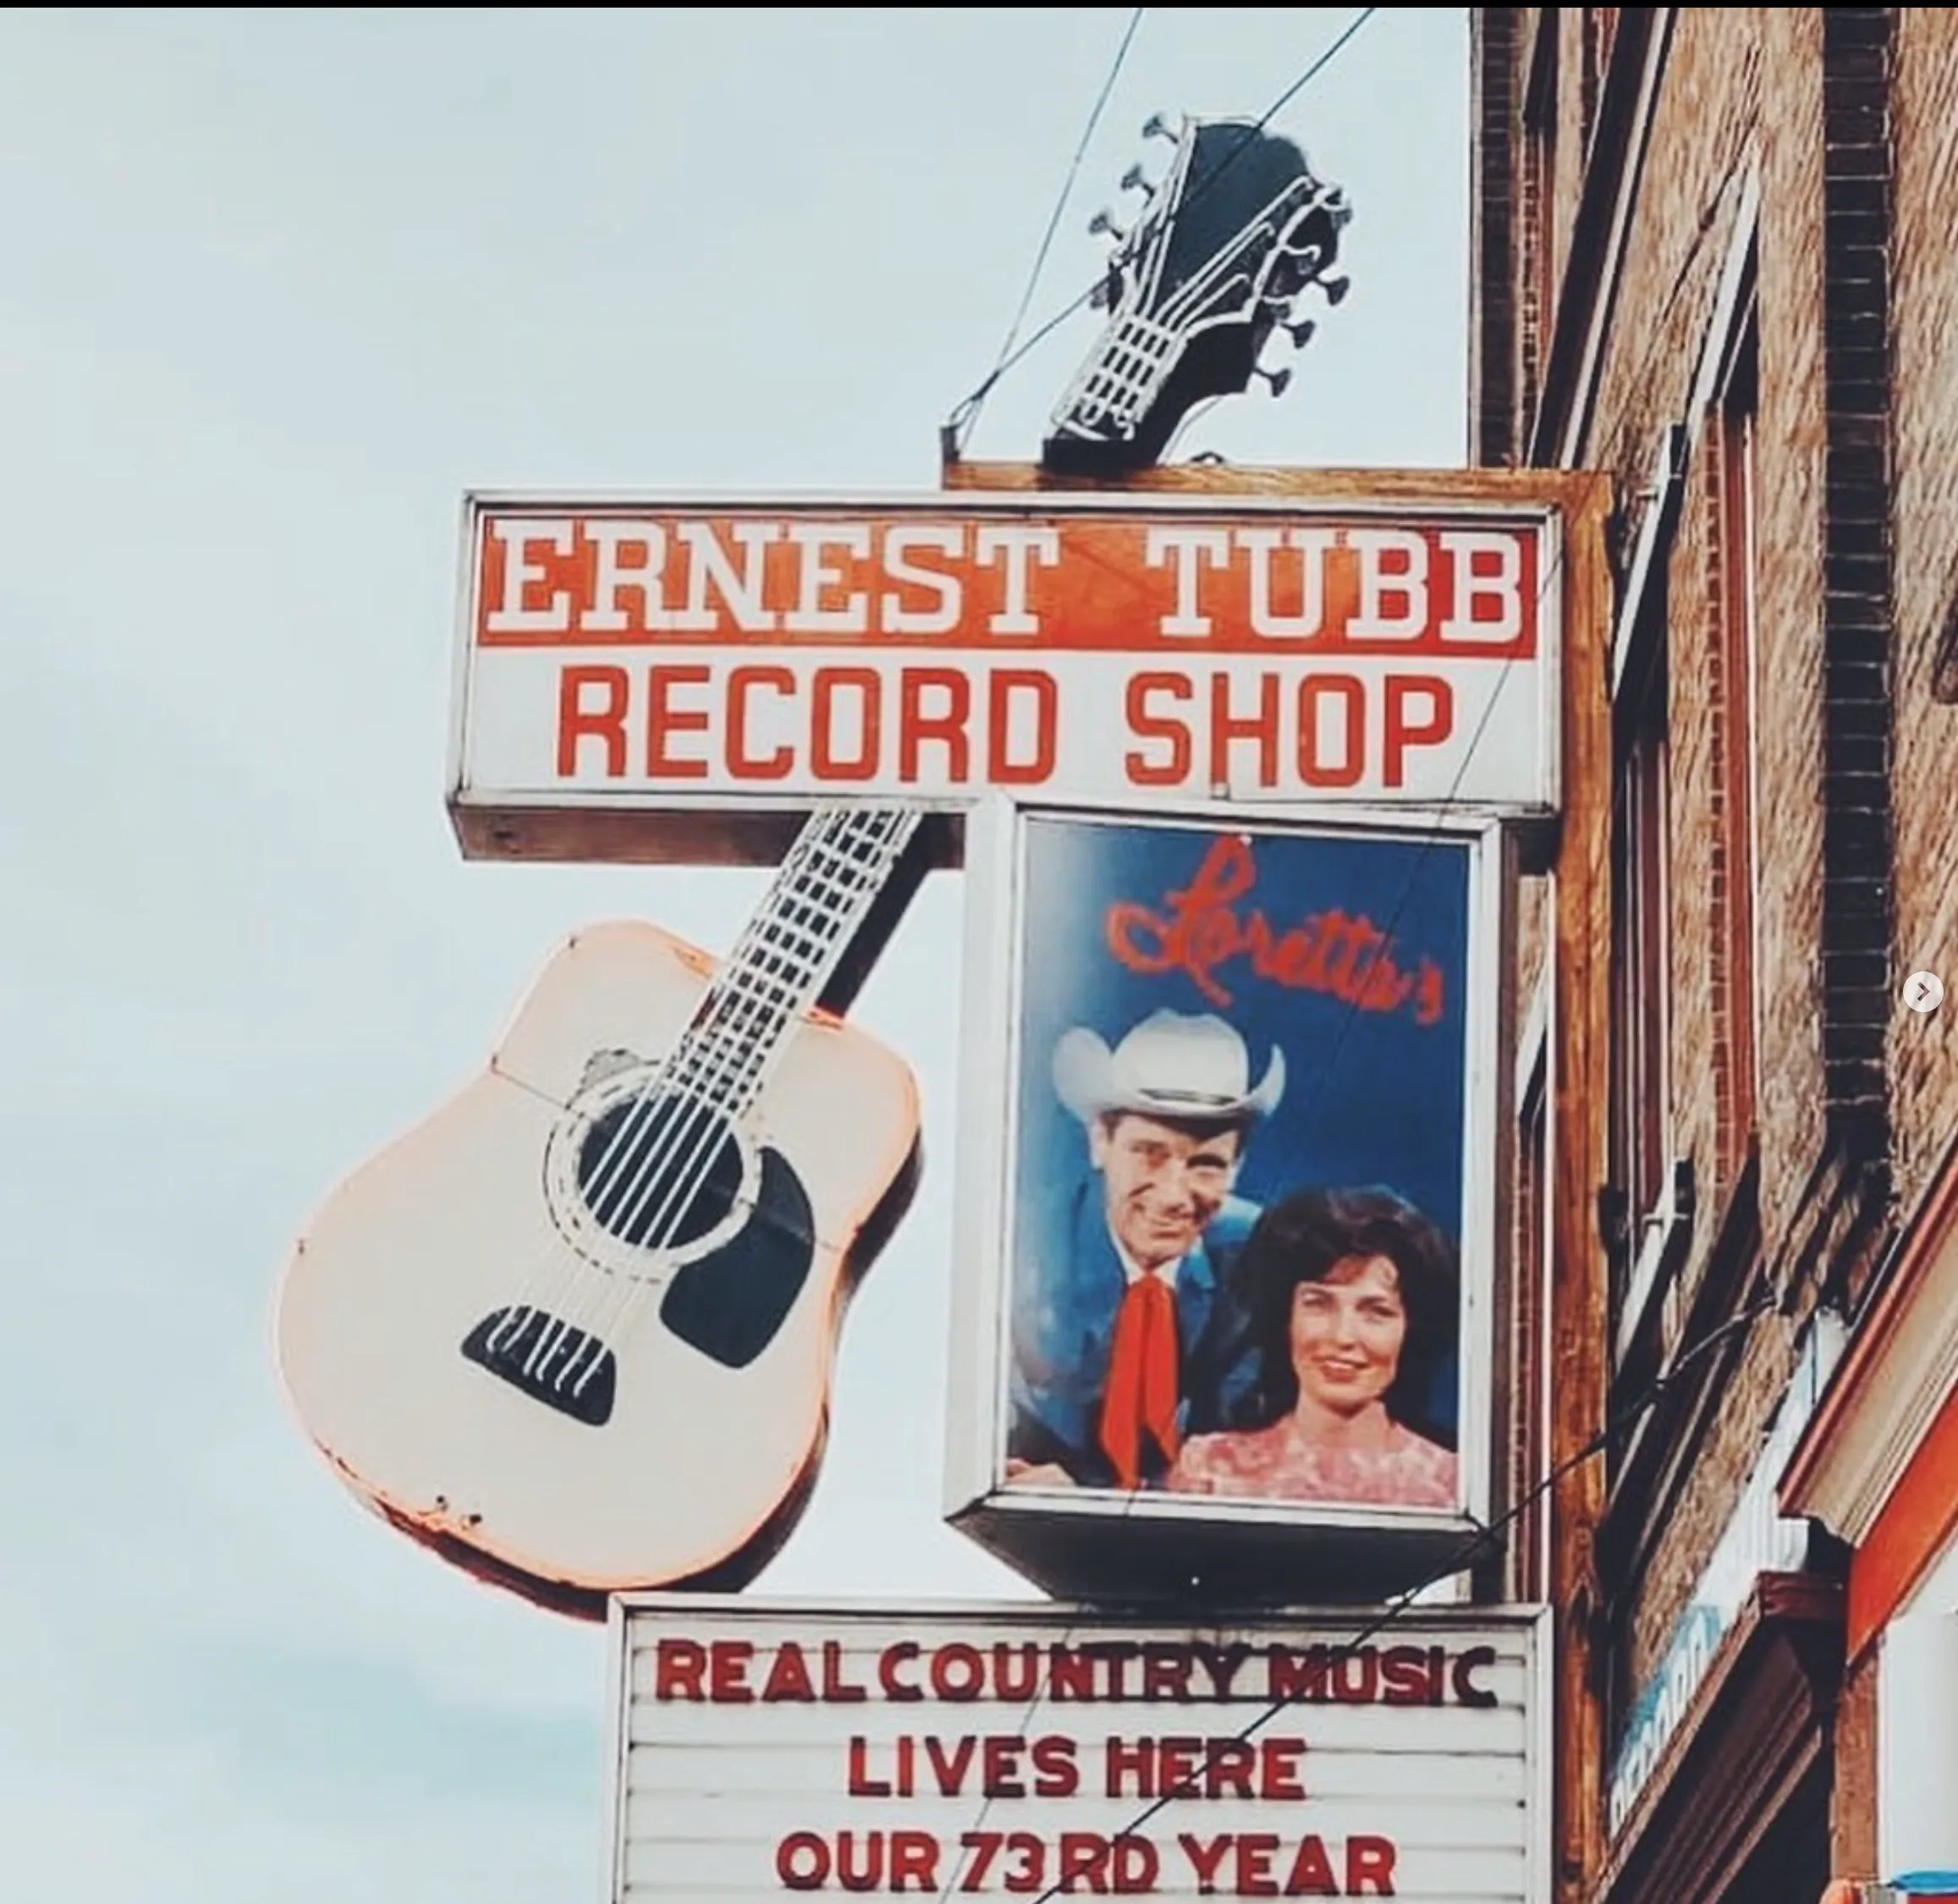 Earnest Tubb Record Shop